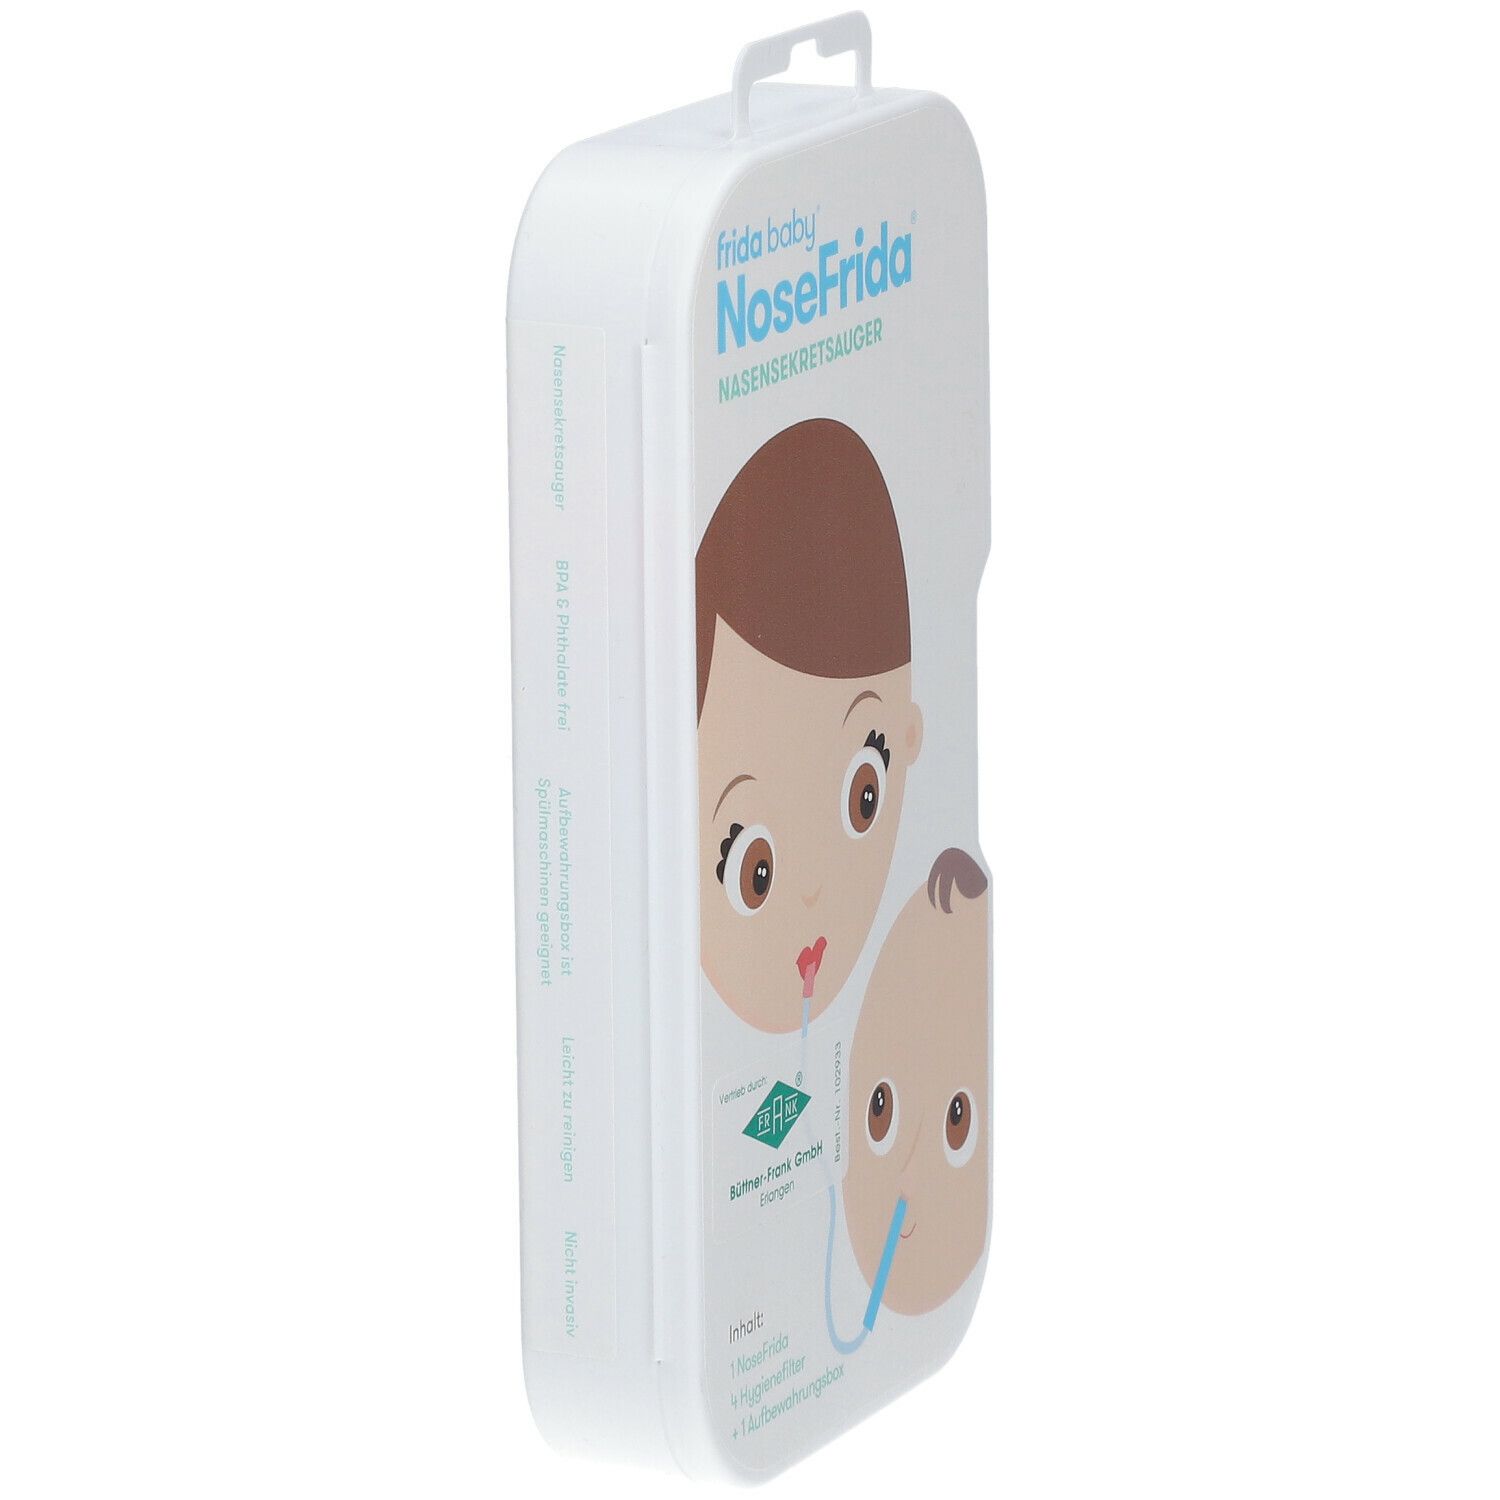 NoseFrida® Nasensekretsauger inkl. Hygienefilter